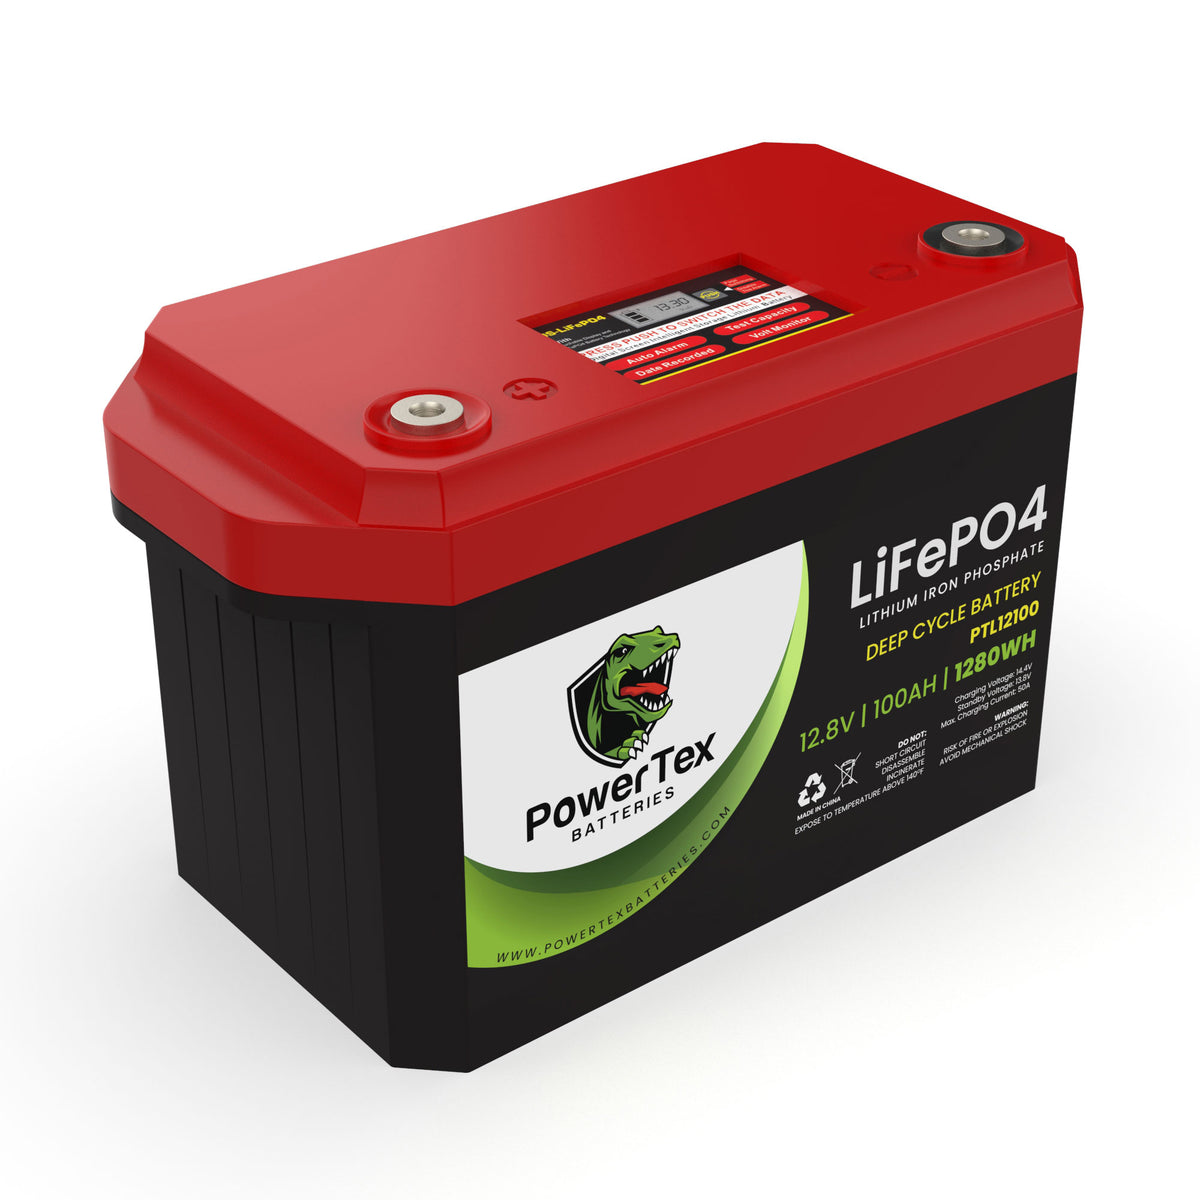 12V 100Ah LiFePO4 Lithium Iron Phosphate Deep Cycle Battery